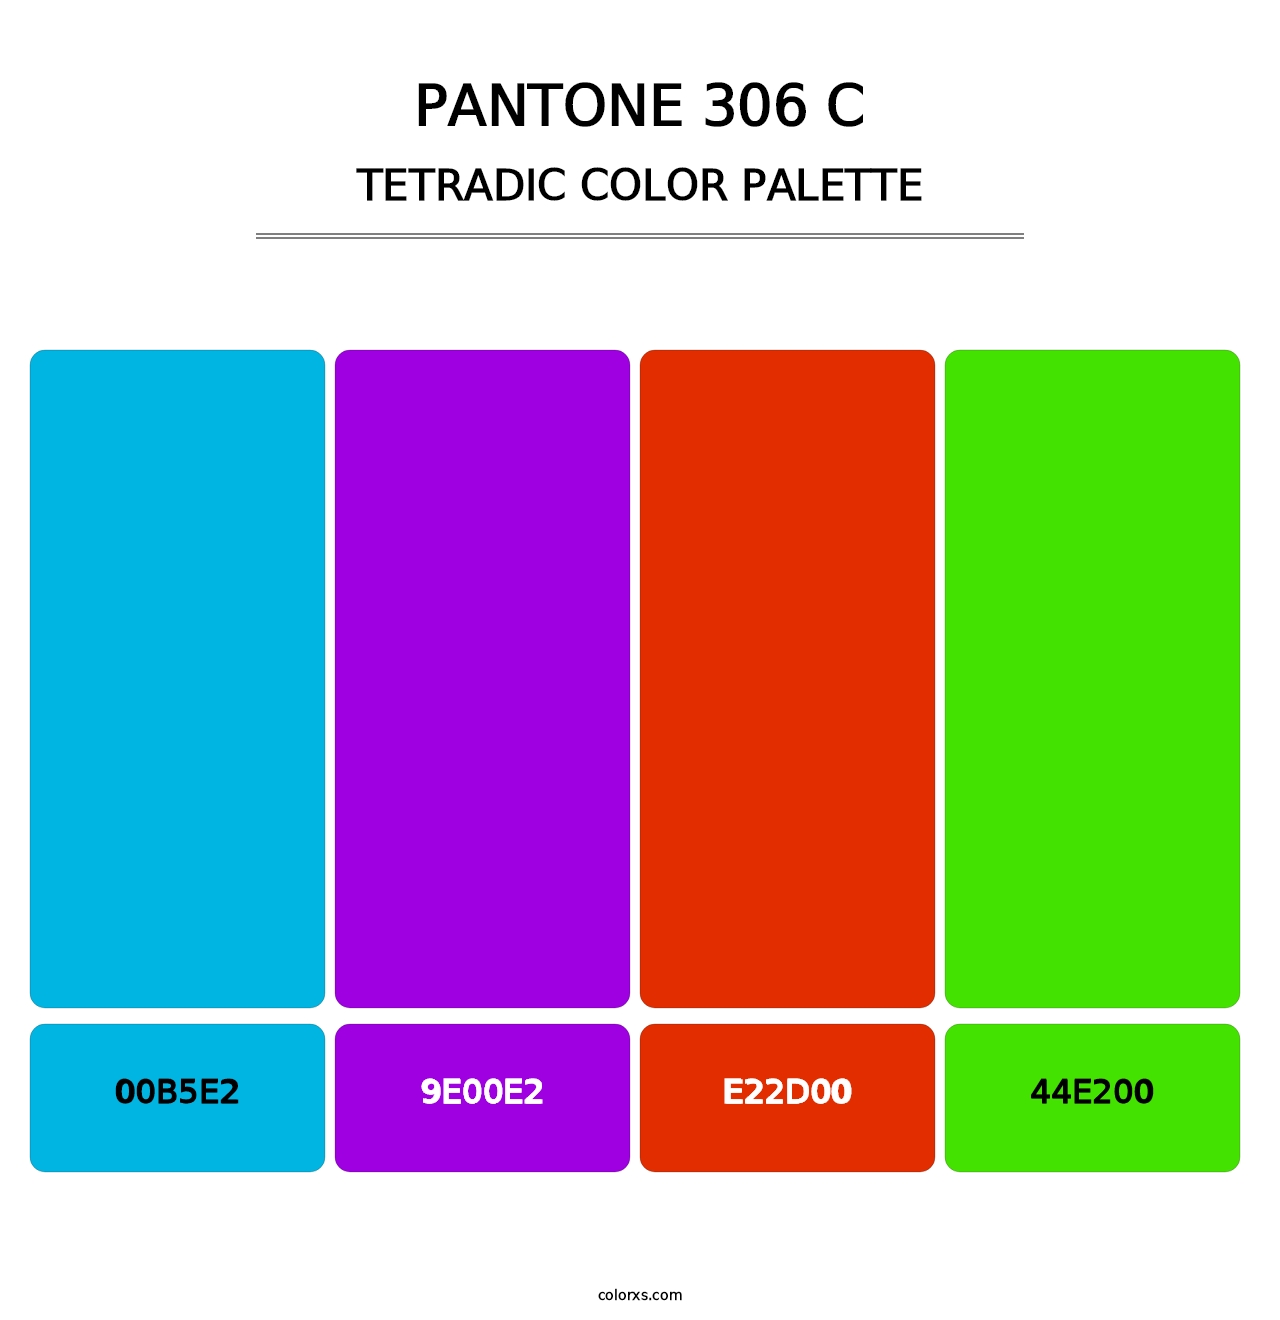 PANTONE 306 C - Tetradic Color Palette